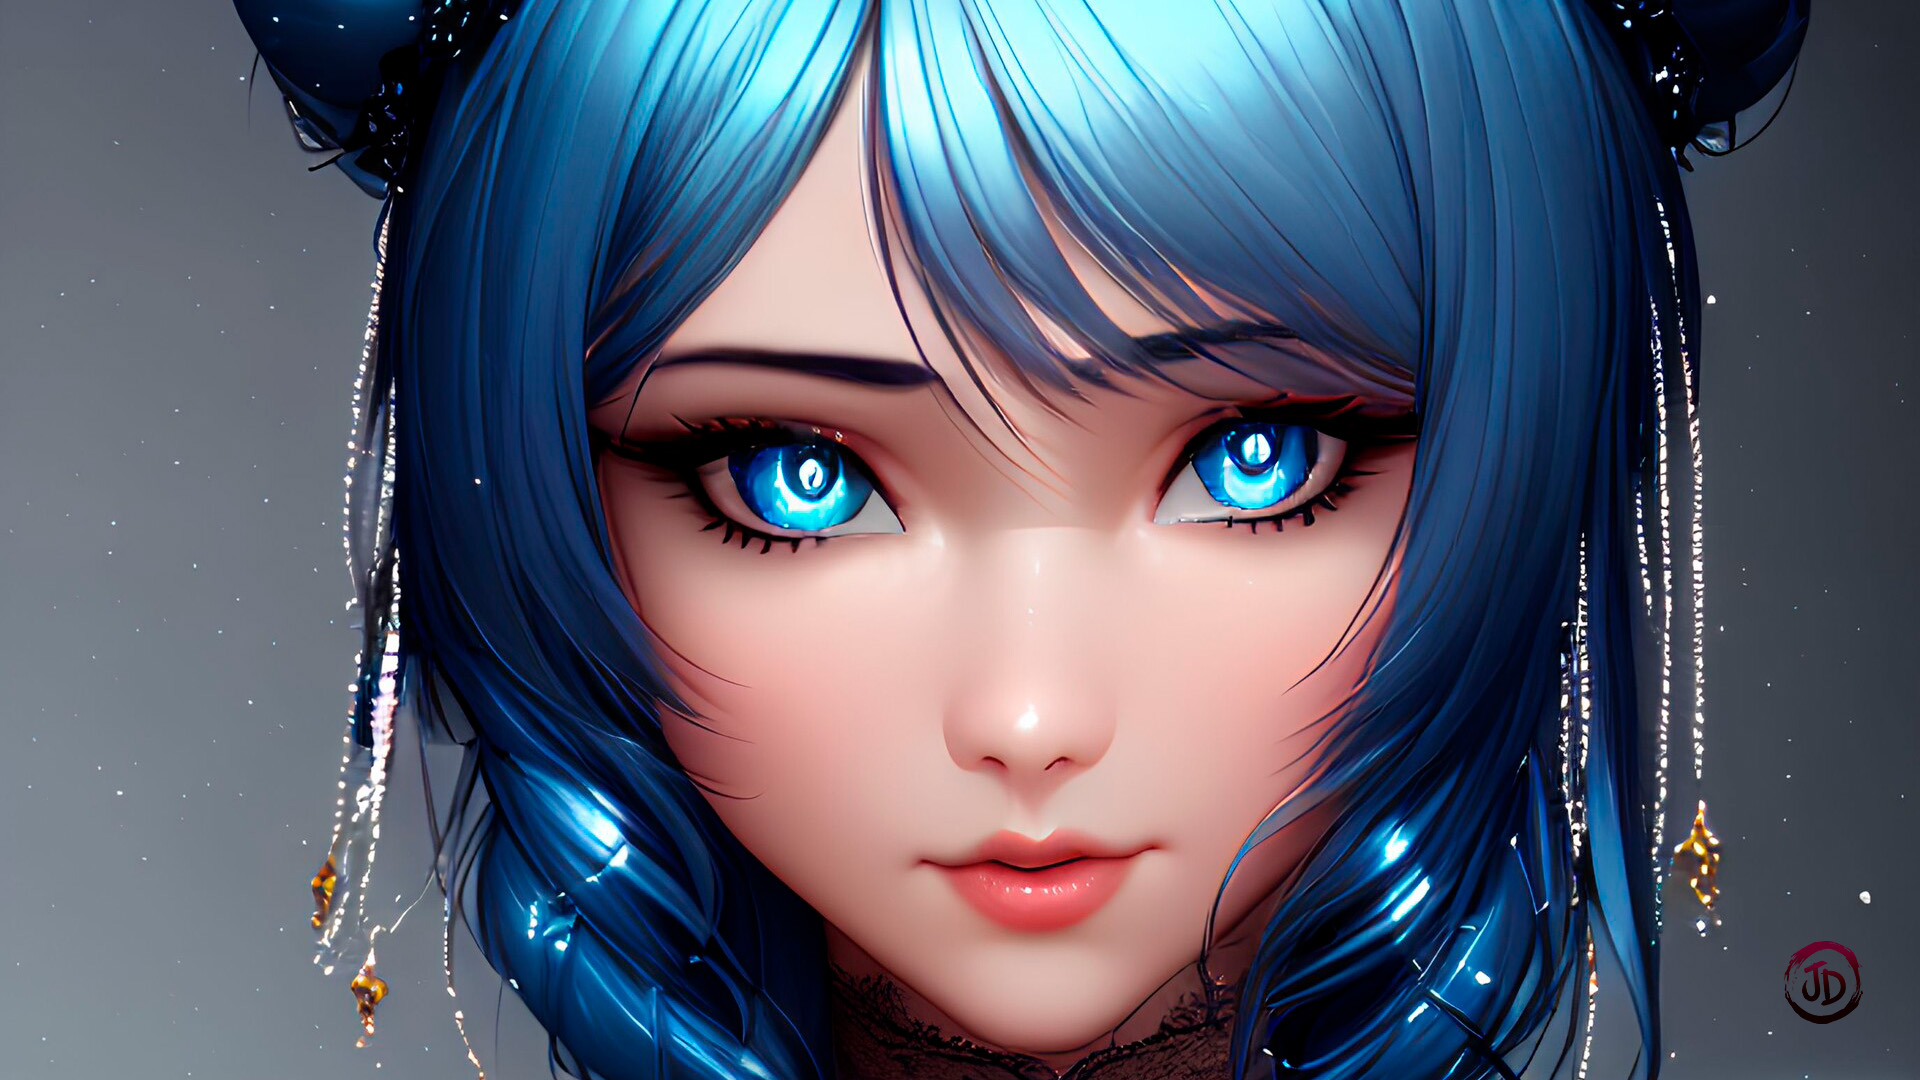 General 1920x1080 fantasy girl blue hair blue eyes closeup anime